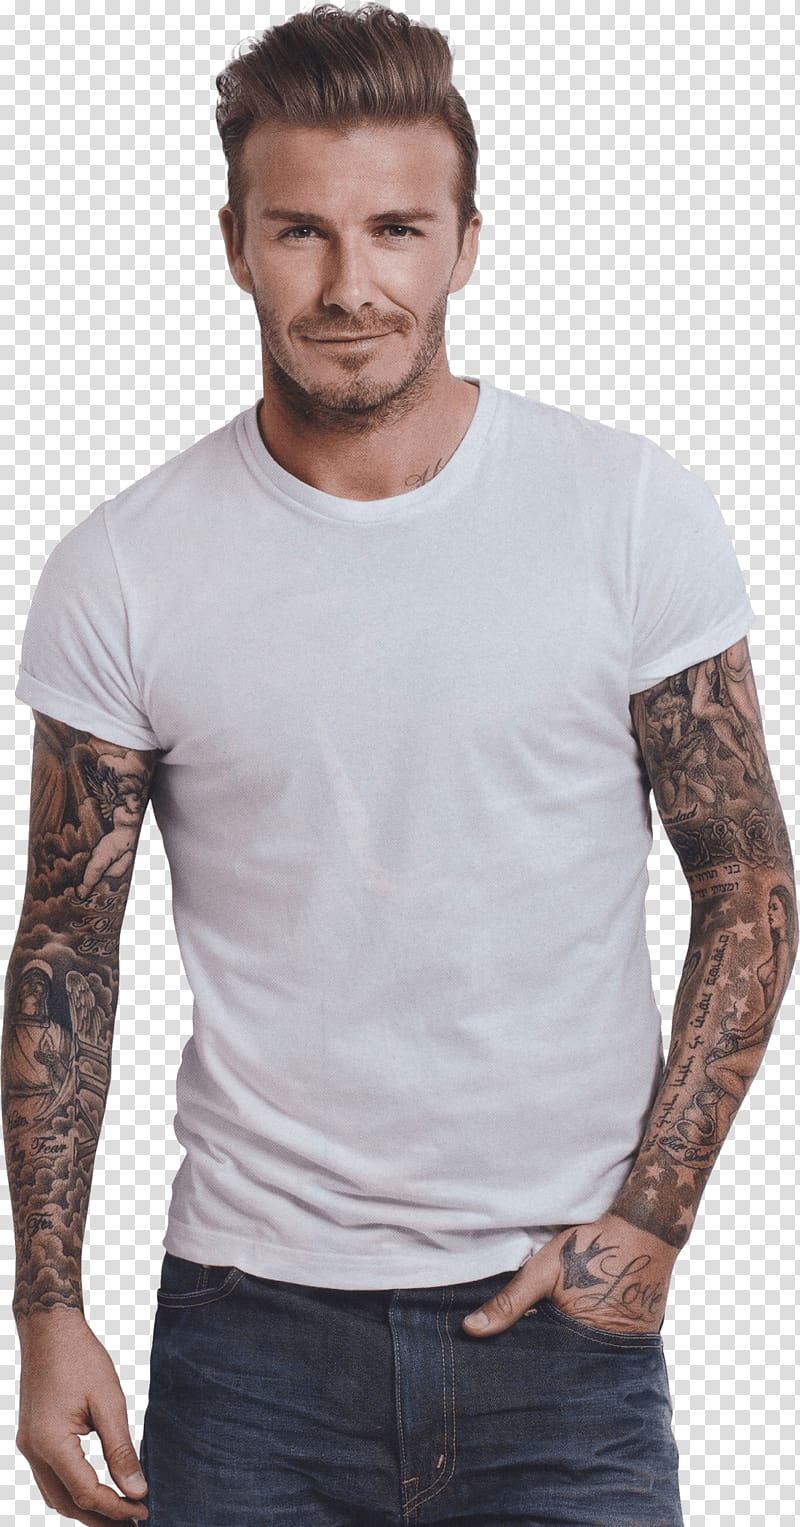 David Beckham Sleeve tattoo England national football team Soccer Player, chest tattoo transparent background PNG clipart